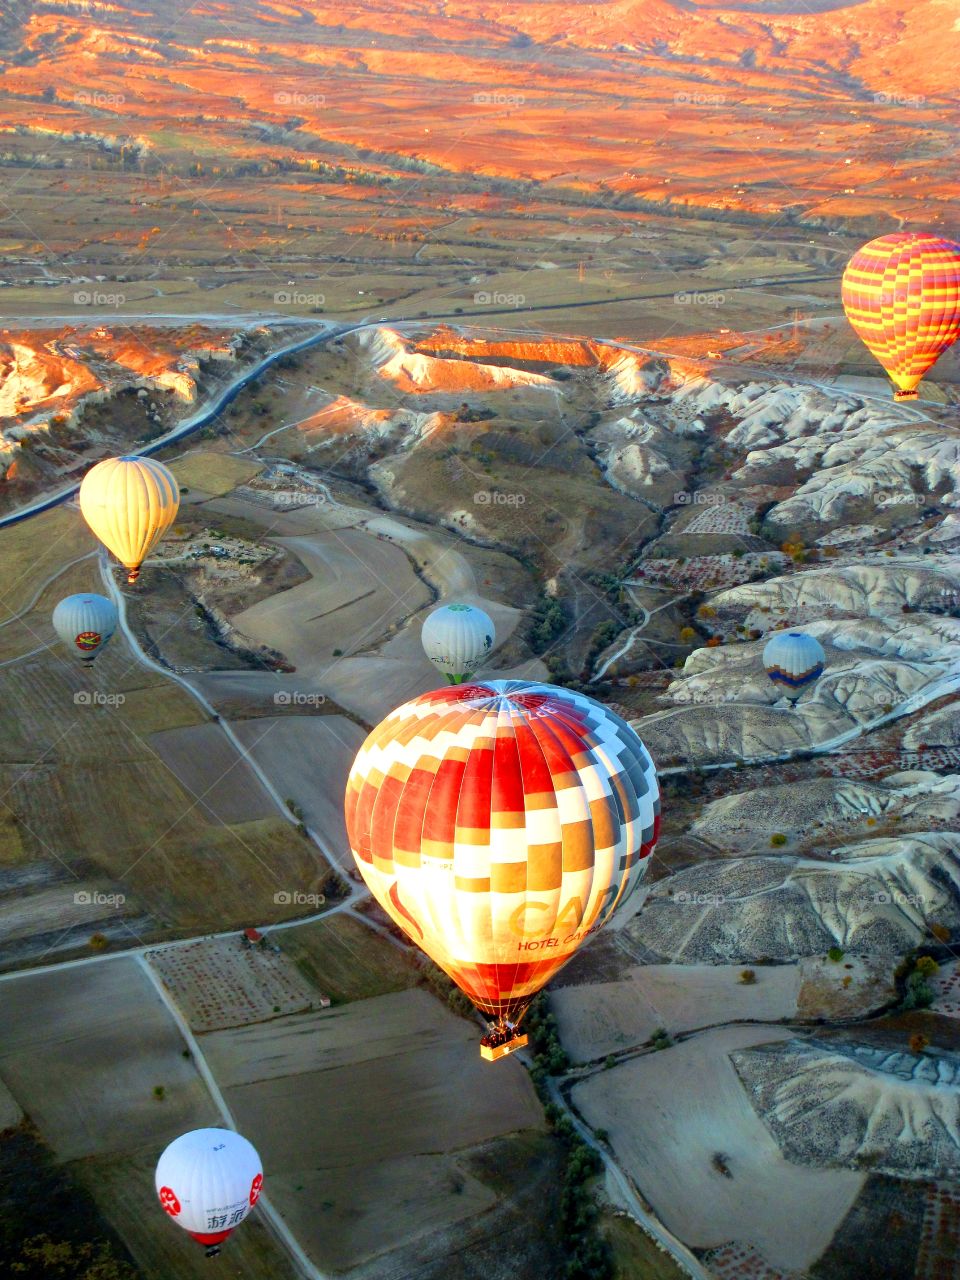 cappadocia amazing landscape from hot air balloon